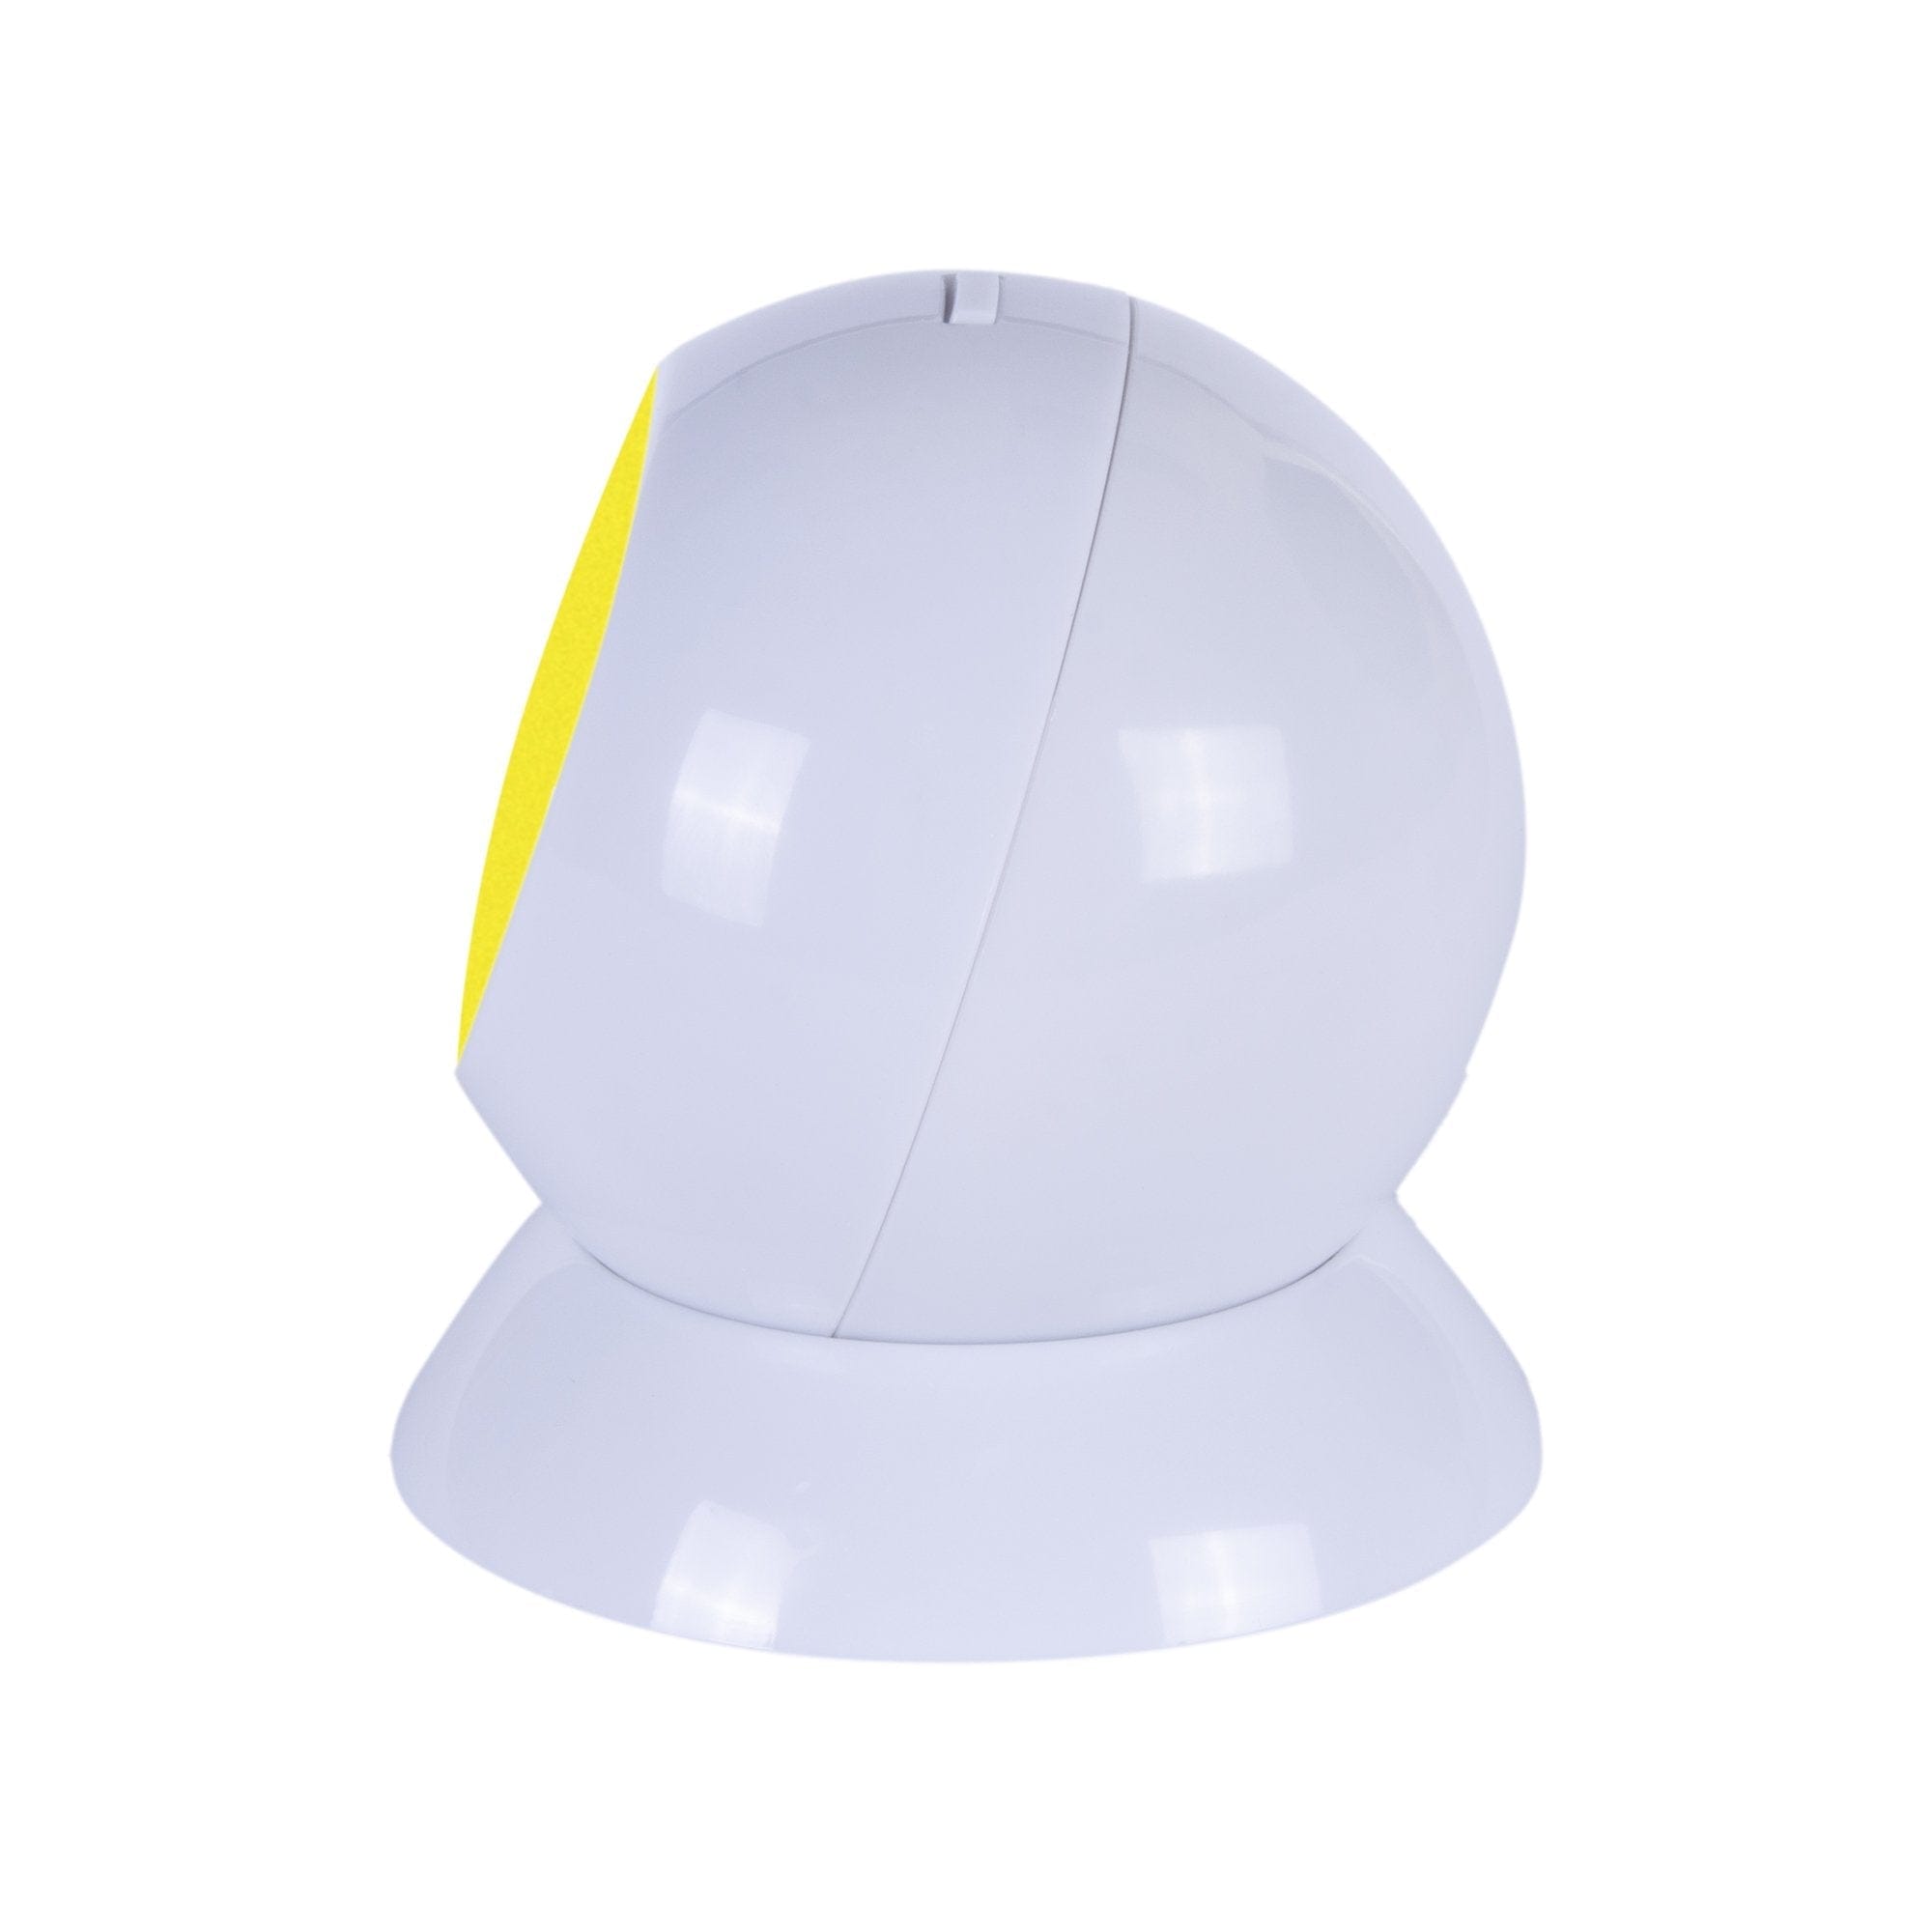 Brillar Electrical Wireless Swivel Ball Light BR0010